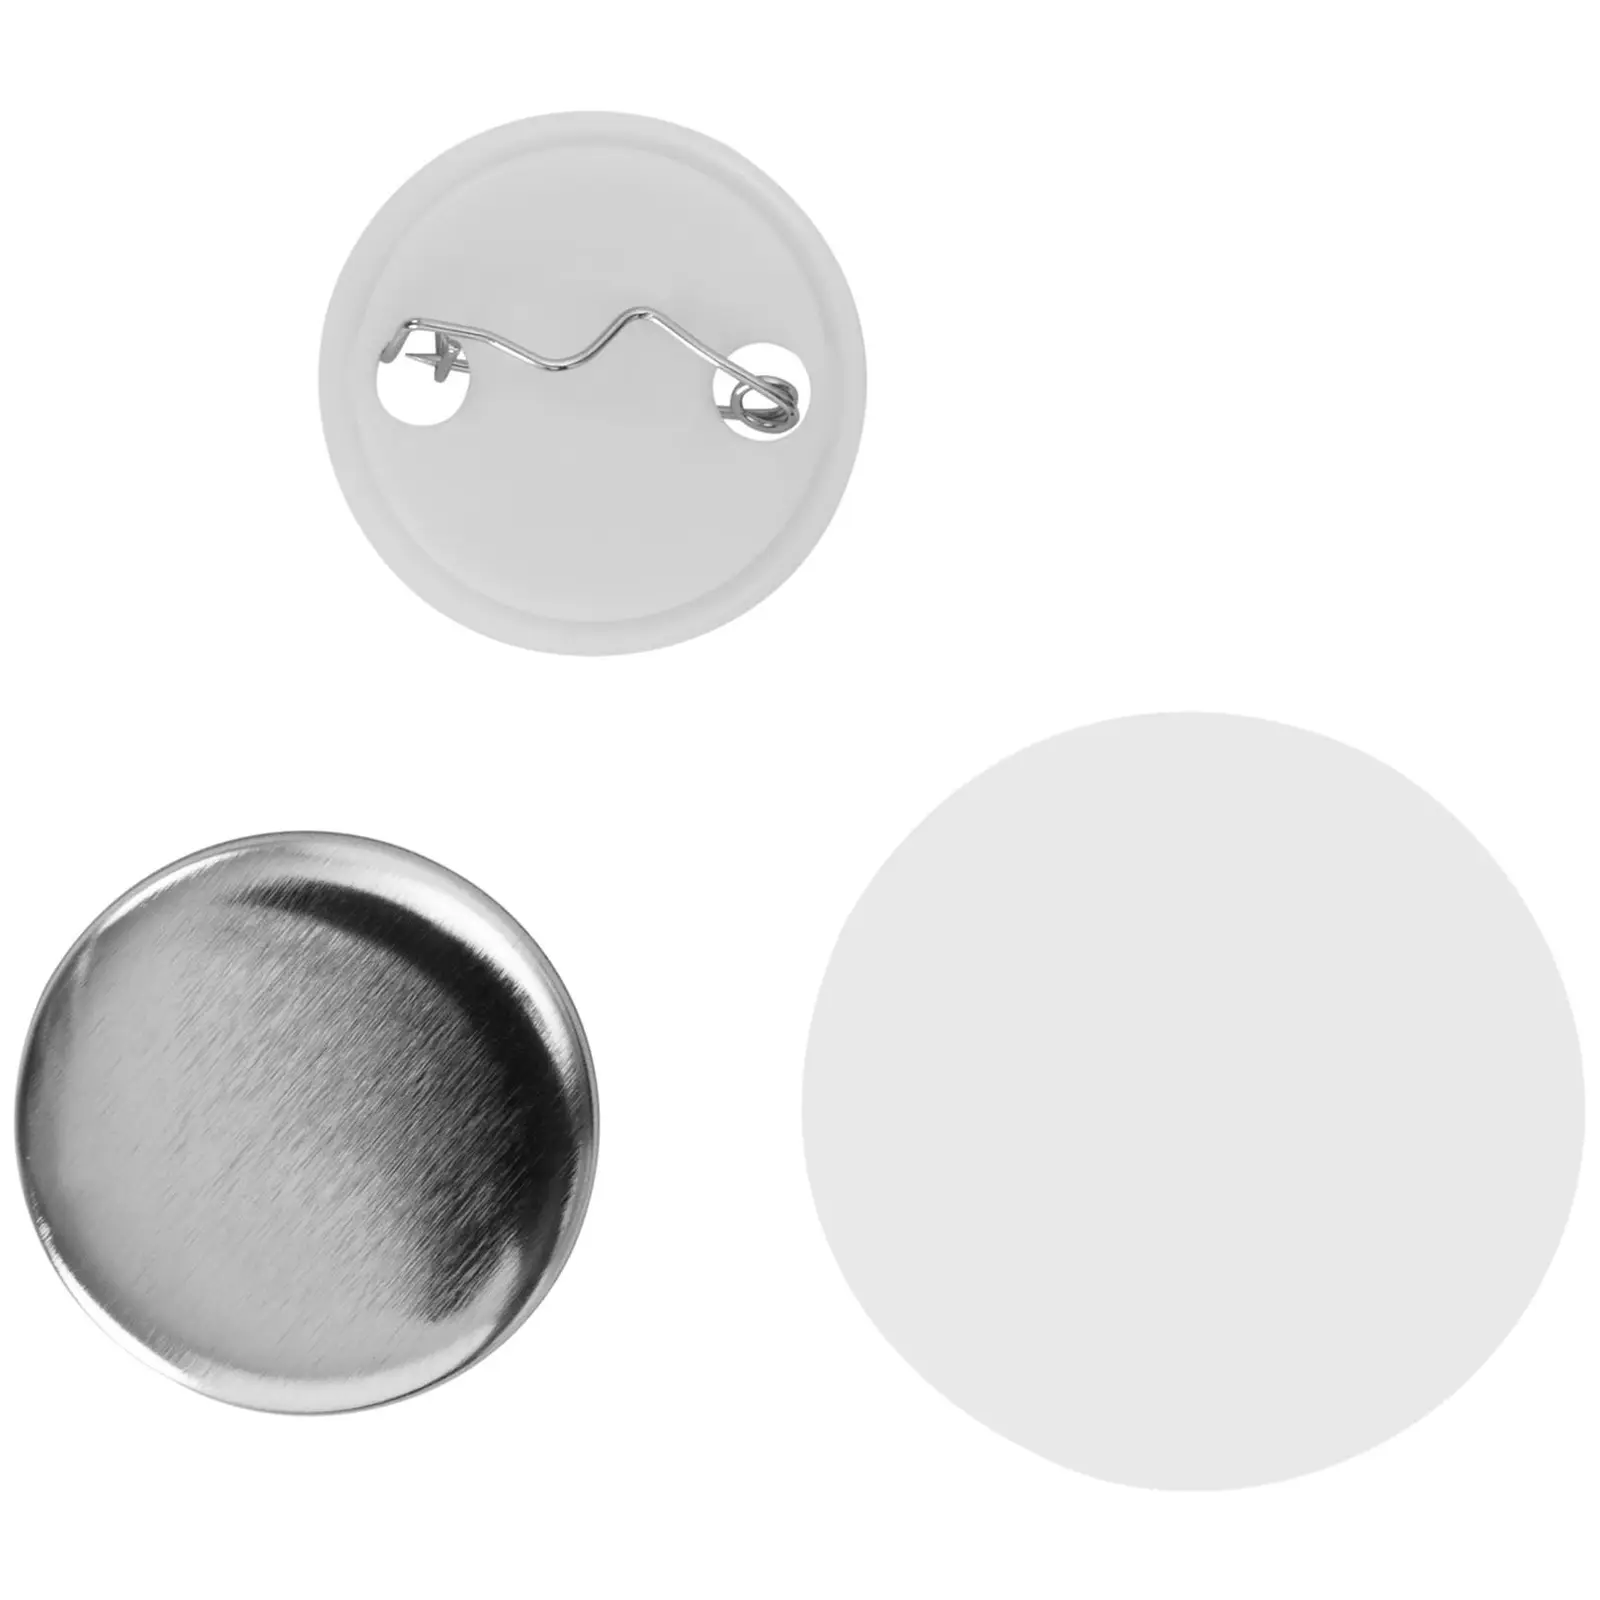 Blank Button Badges - Ø 32 mm - 1,000 pcs.